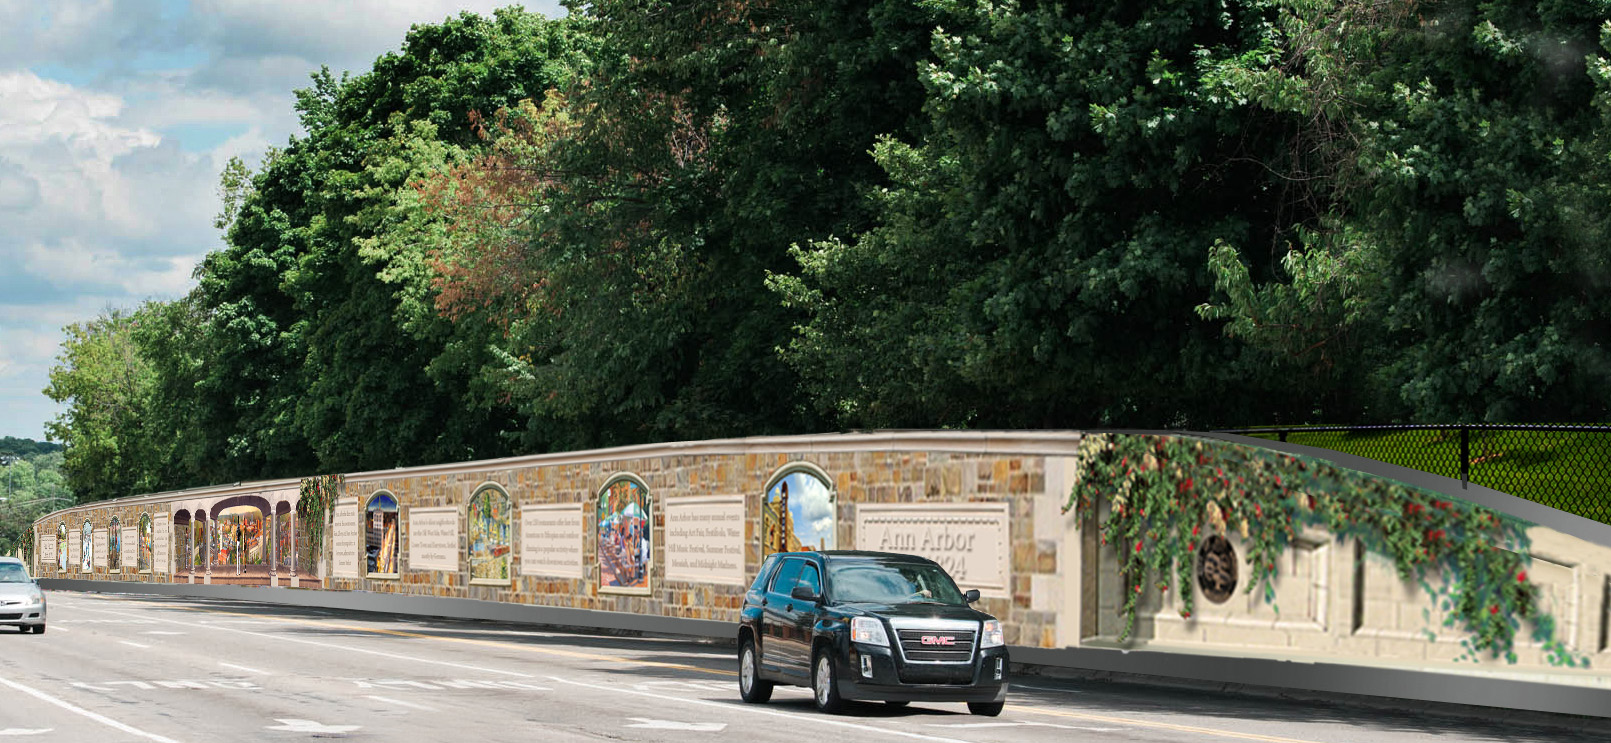 Concept art for Katherine Larson's proposed "Ann Arbor Story Mural Walls" installation along Stadium Boulevard.